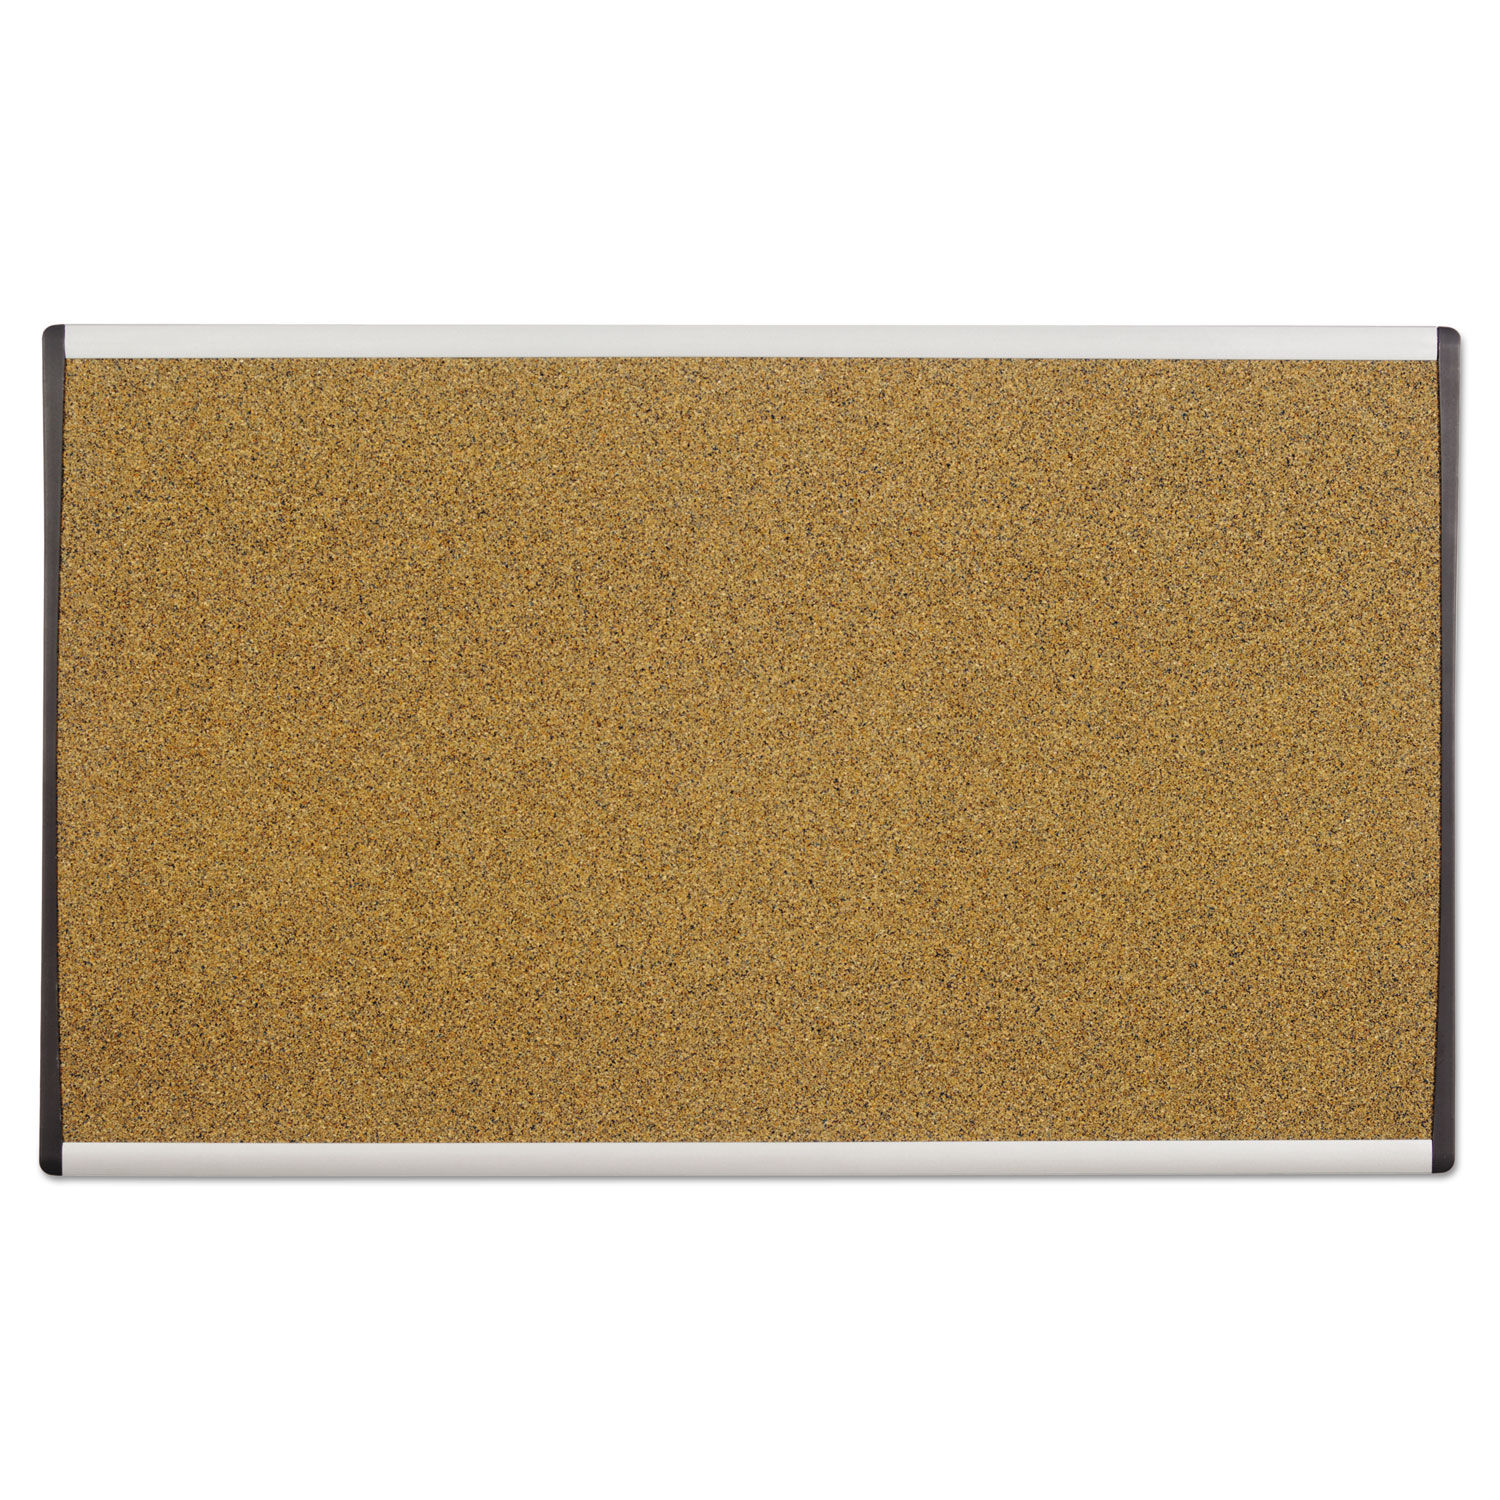 ARC Frame Cubicle Cork Board 24 x 14, Natural Surface, Silver Aluminum Frame